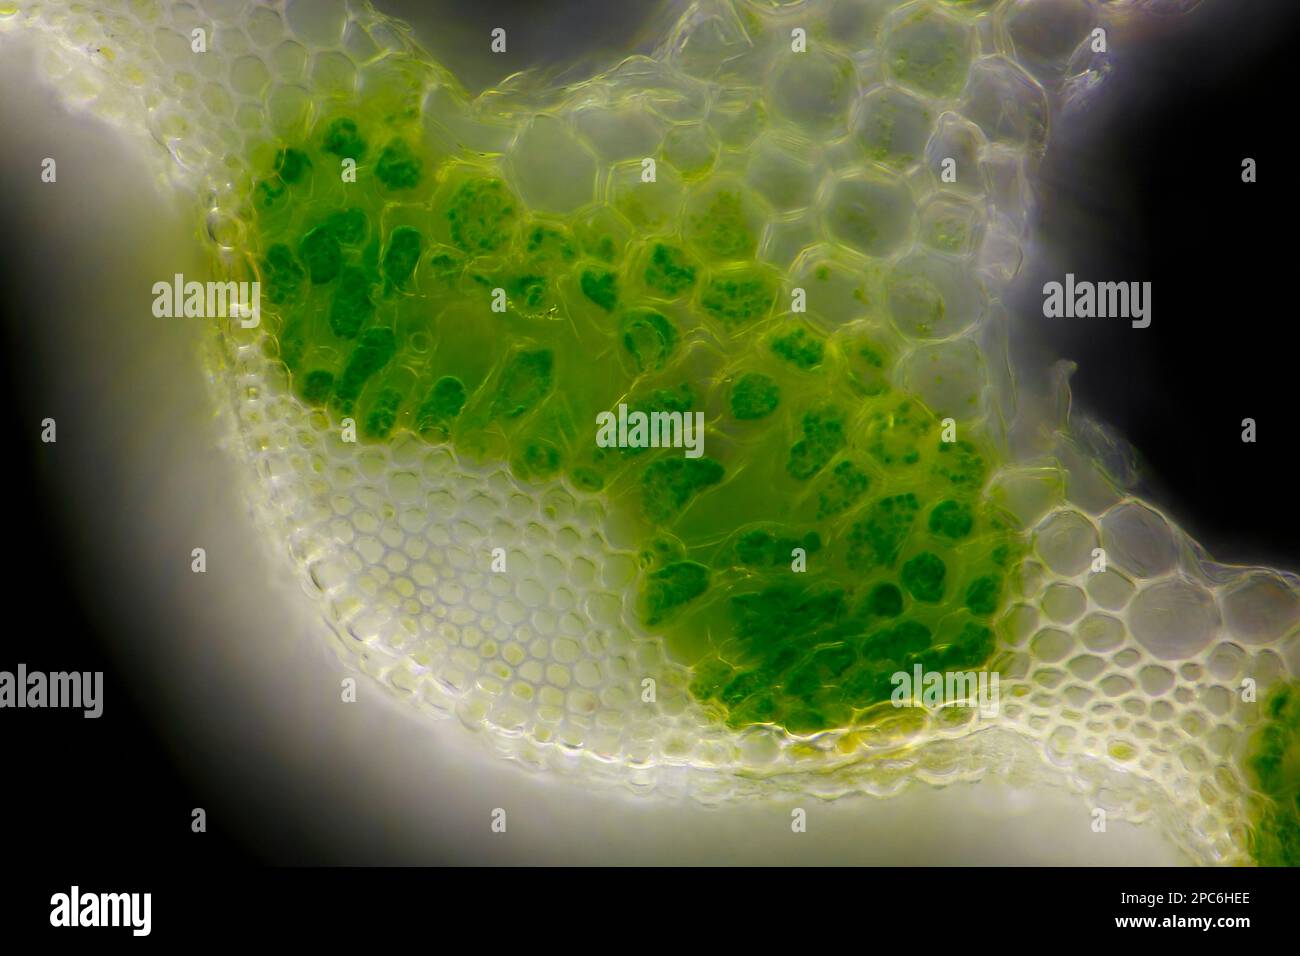 Microscopic view of Horsetail (Equisetum arvense) stem cross-section. Darkfield illumination. Stock Photo